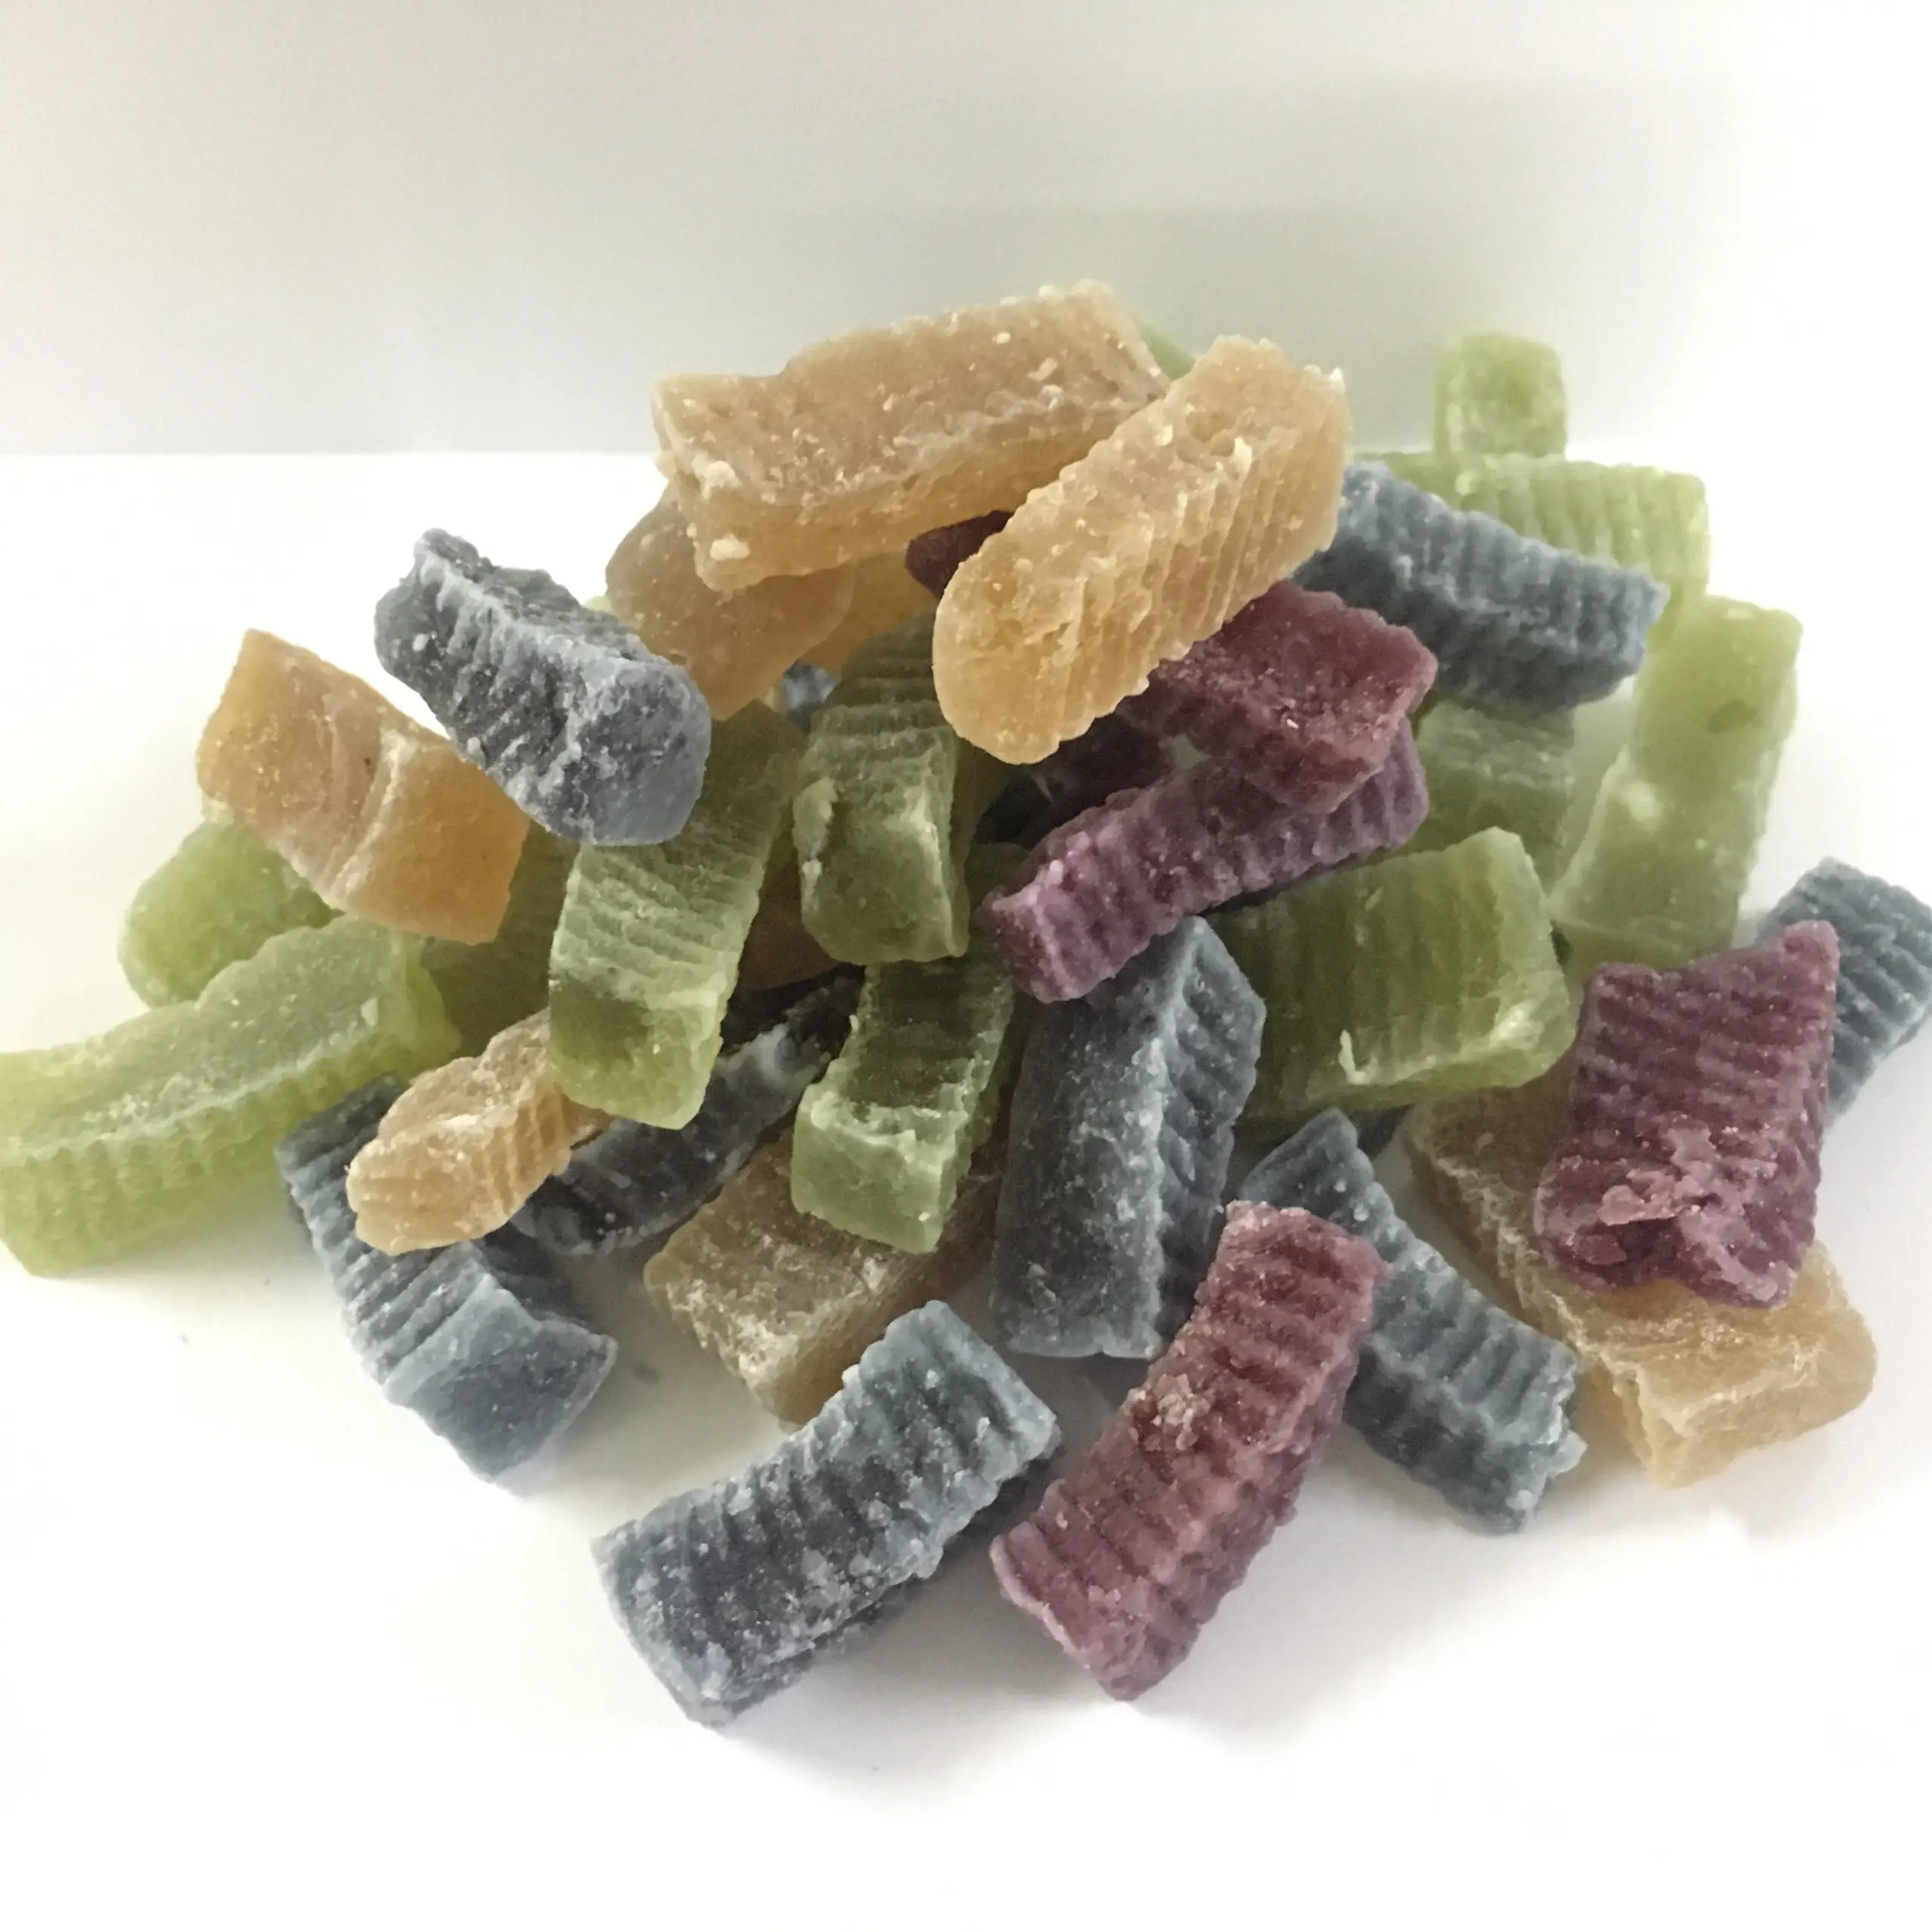 [HOT] Sea Moss Candy Irish Moss Gummies 5フレーバーブーツ免疫システム-Ms. May (84) 904 183 651